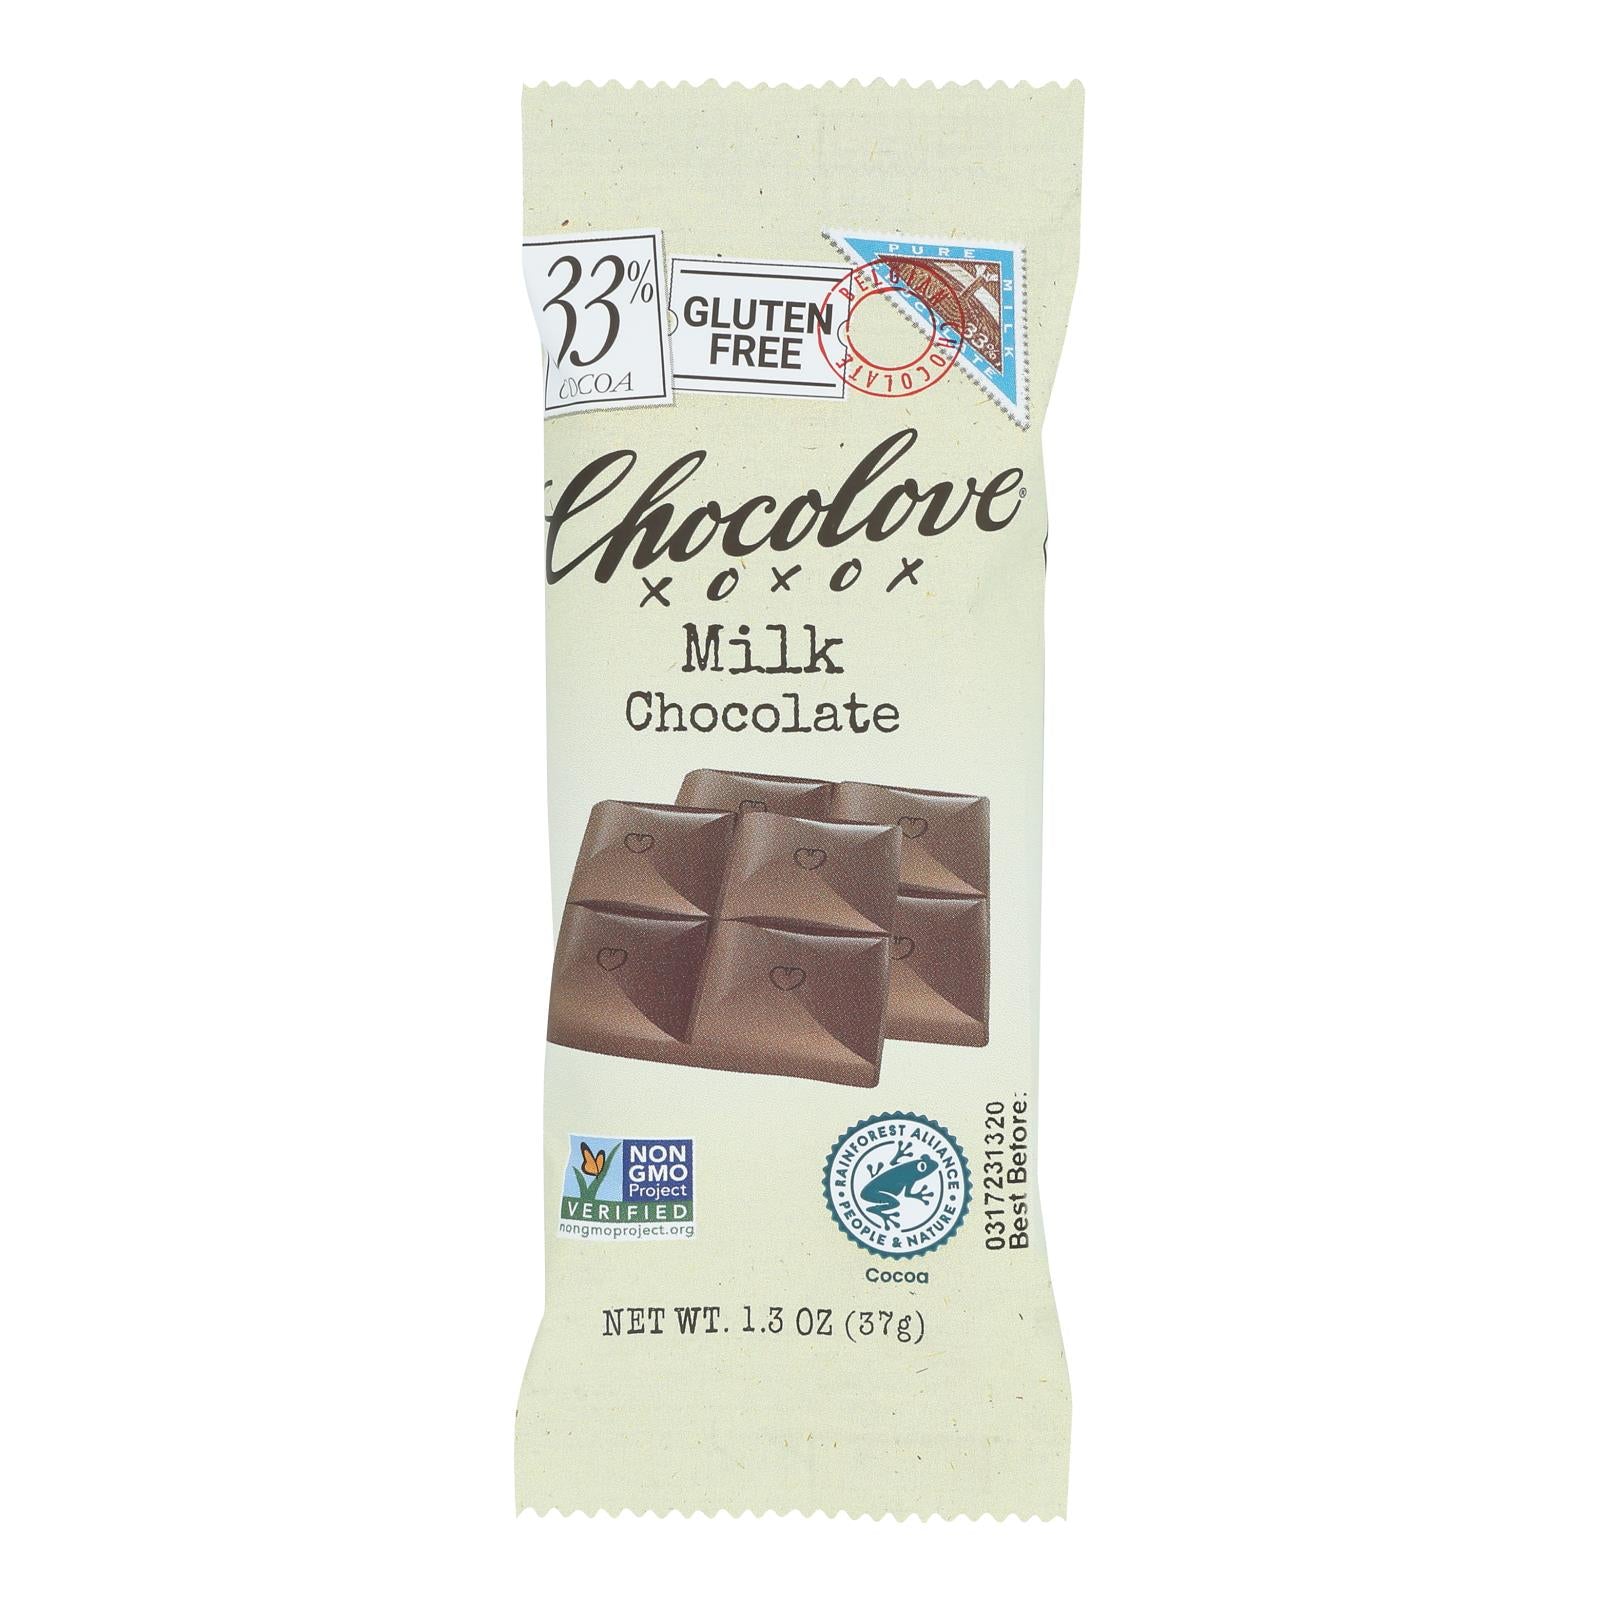 Chocolove Xoxox - Premium Chocolate Bar - Milk Chocolate - Pure - Mini - 1.3 oz Bars - Case of 12